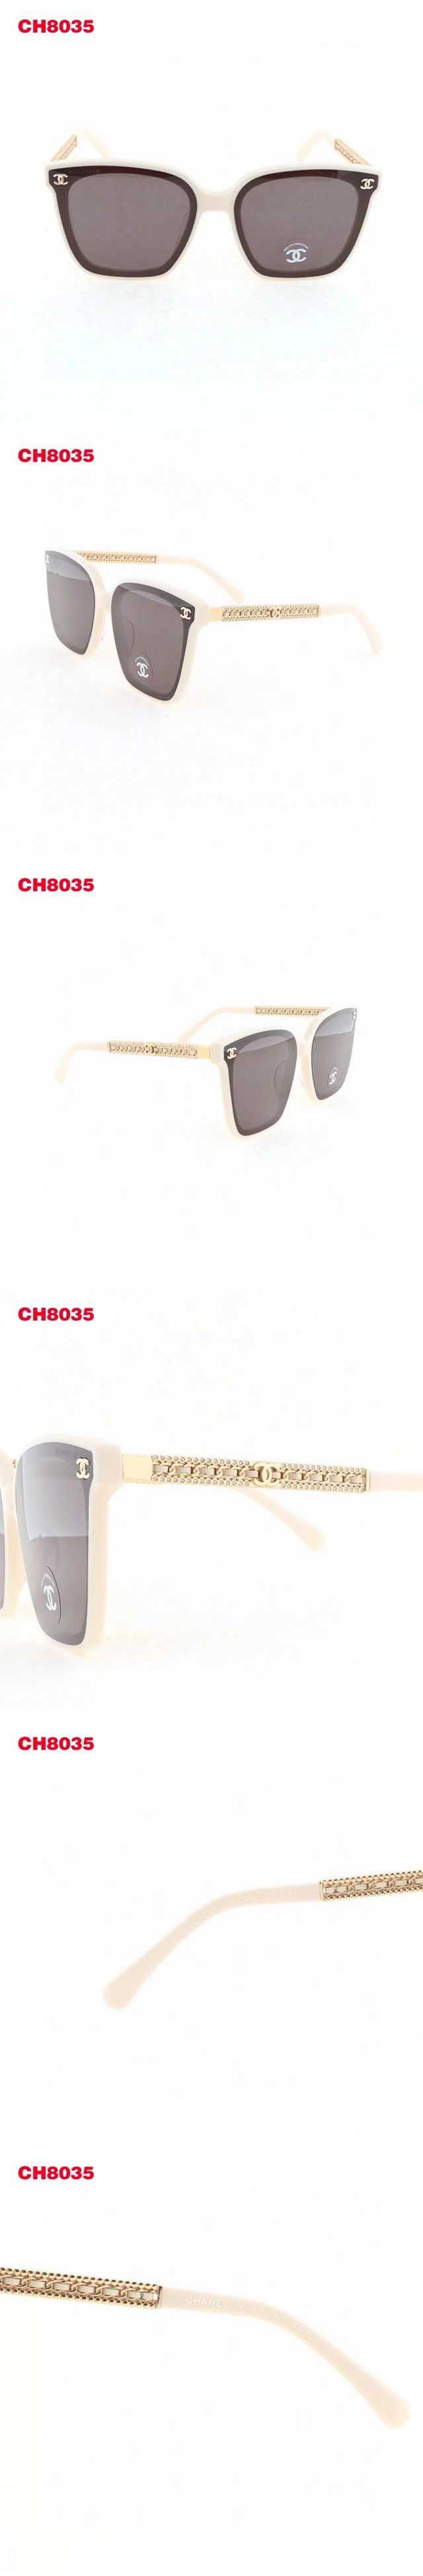 Chanel Pale Yellow Sunglasses シャネル パールイエロー サングラス